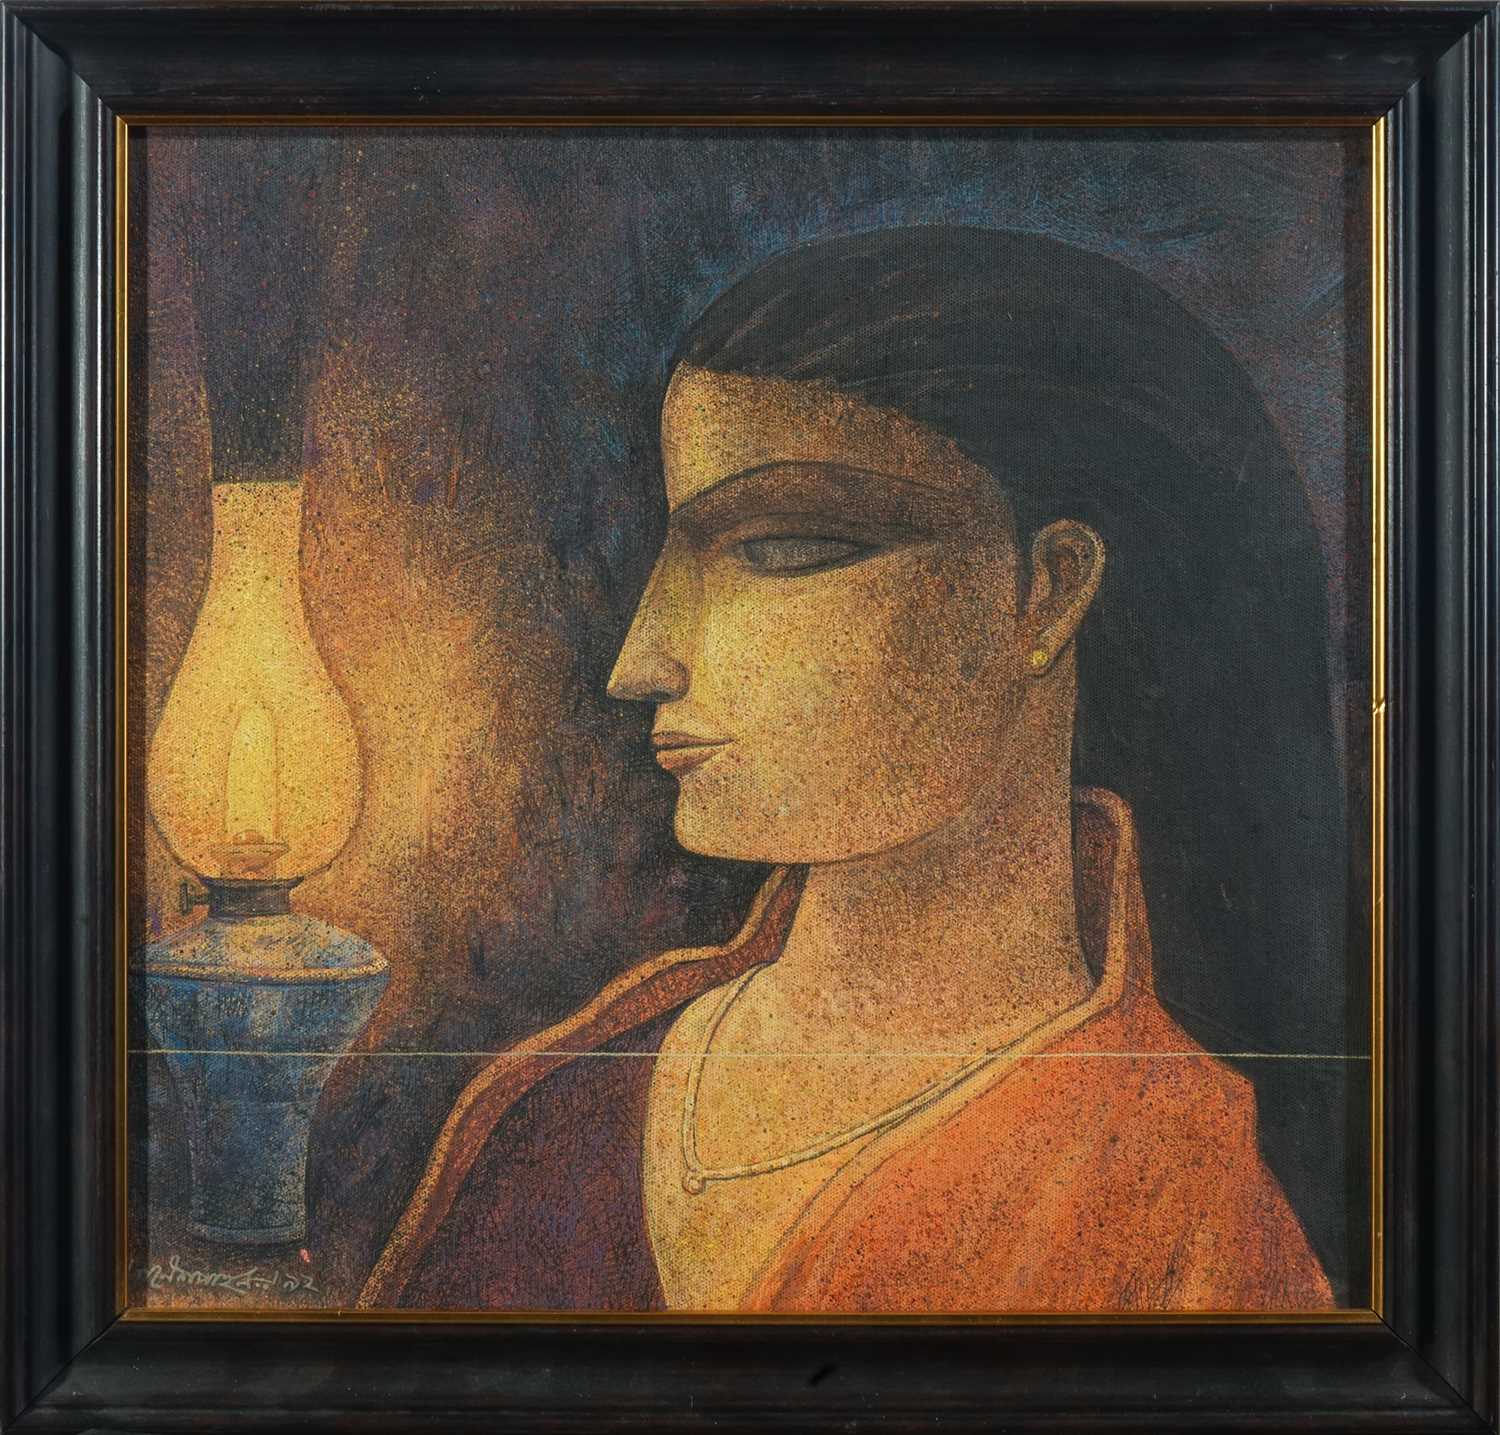 Lot 294 - Ganesh Pyne (Indian b.1937-d.2013), Untitled, 1992